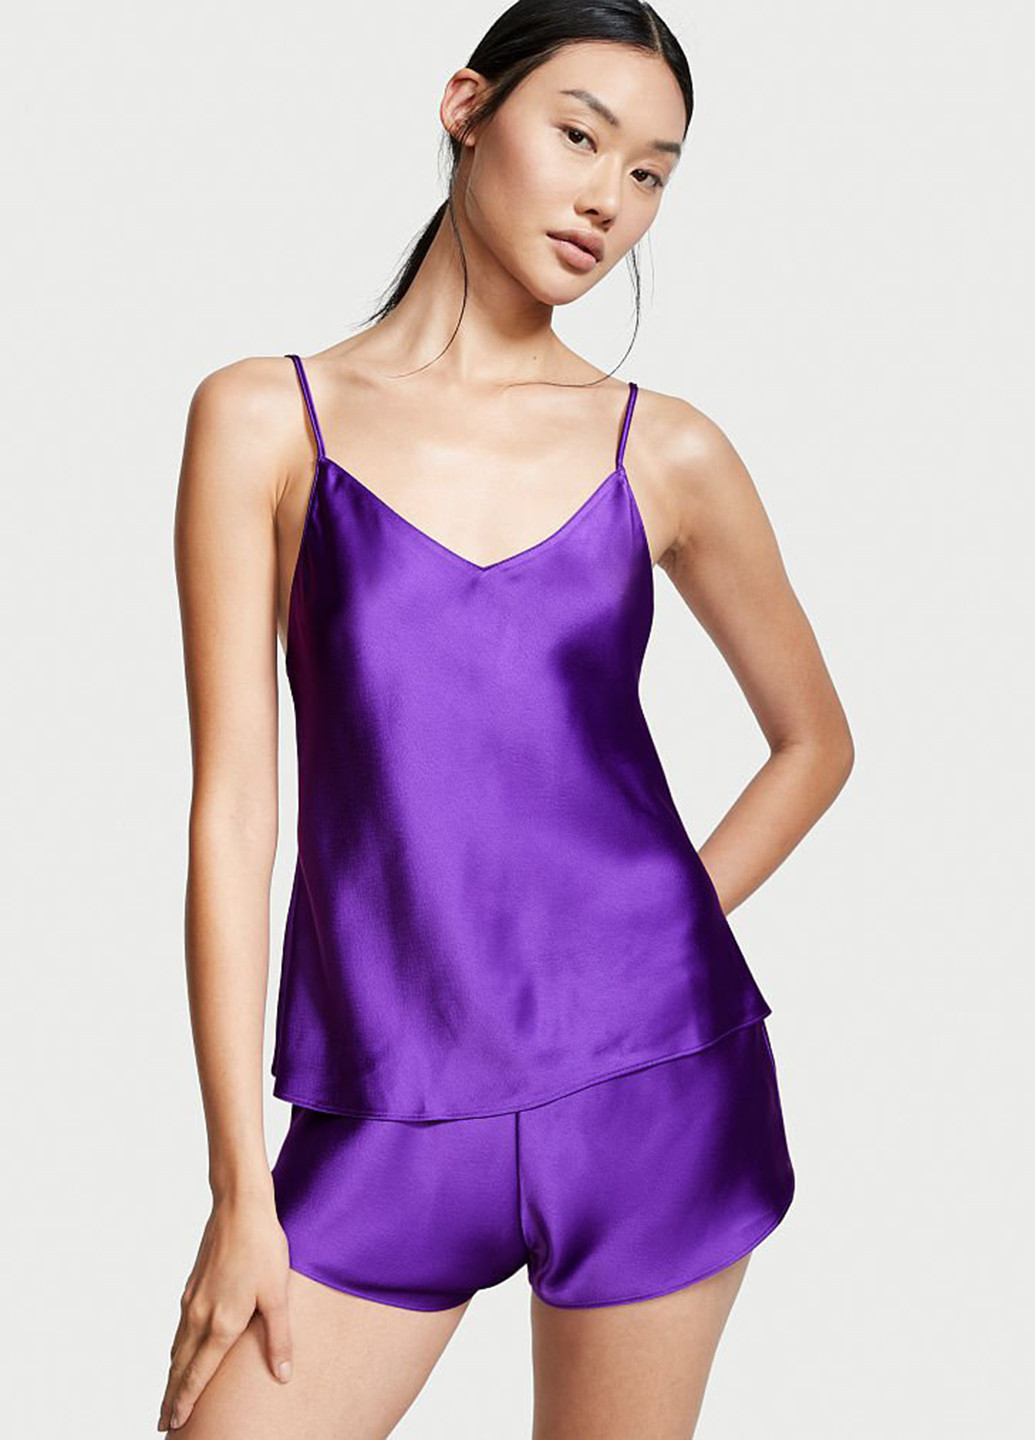 Фіолетова всесезон піжама (майка, шорти) майка + шорти Victoria's Secret